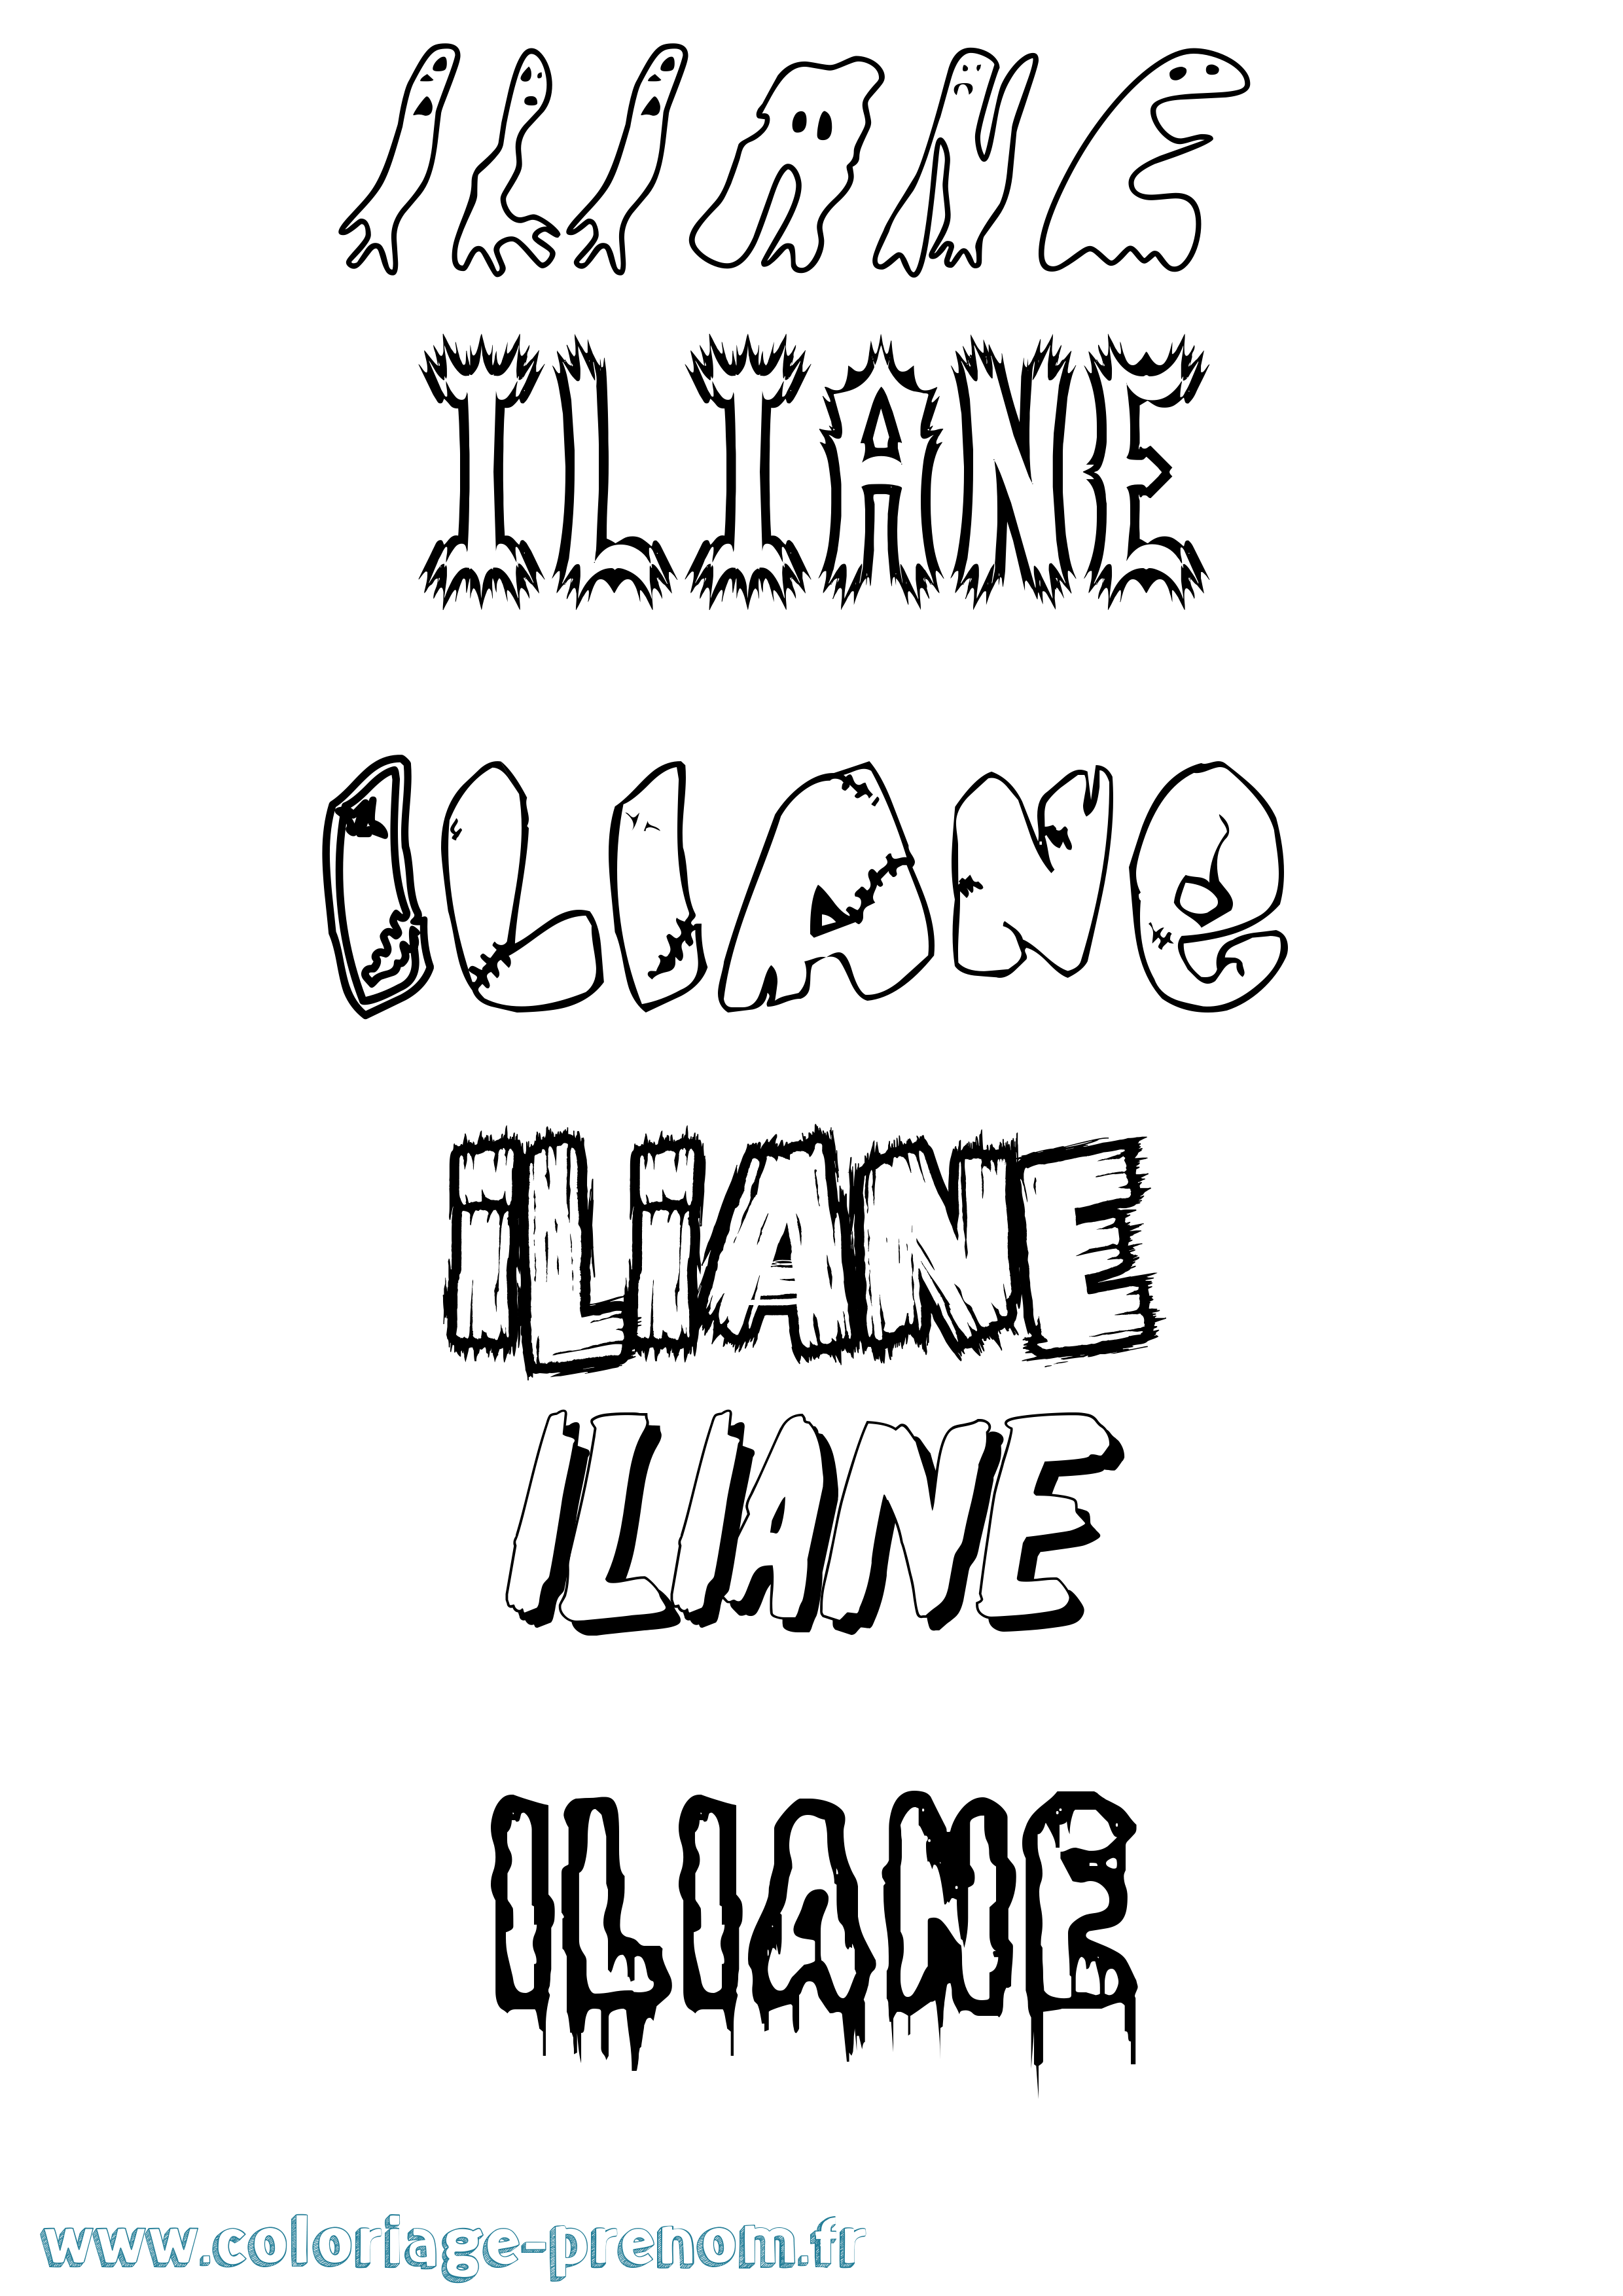 Coloriage prénom Iliane